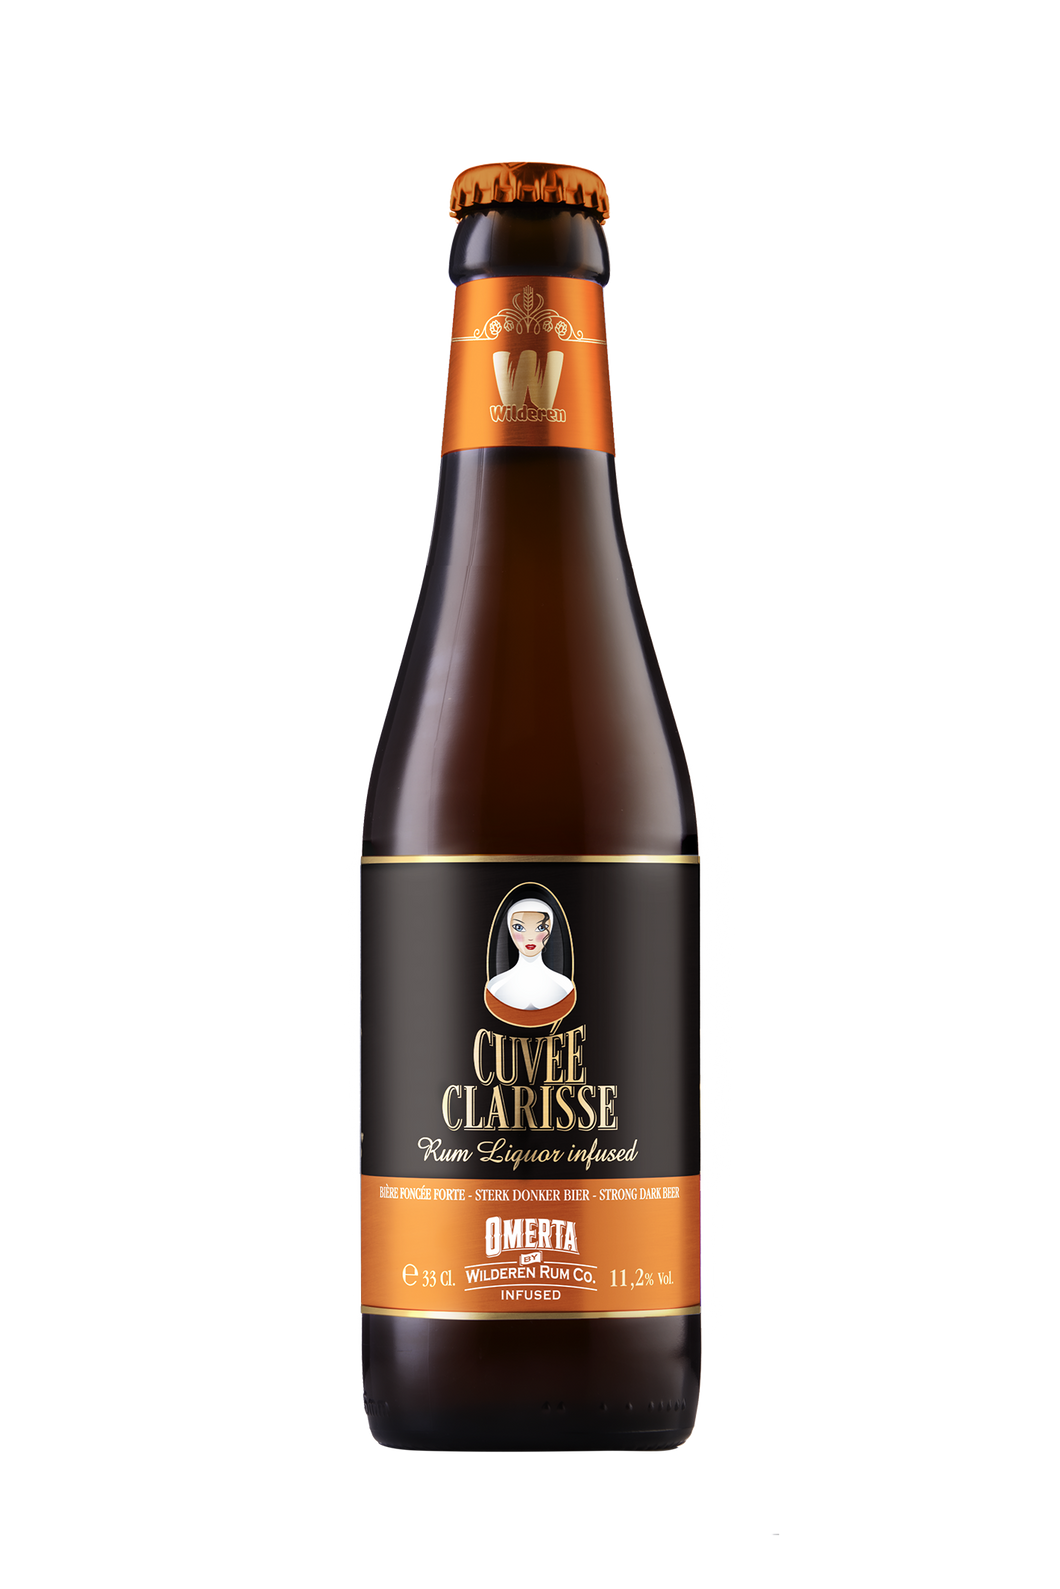 NEW - Cuvée Clarisse Omerta Rum liquor Infused 4x33cl